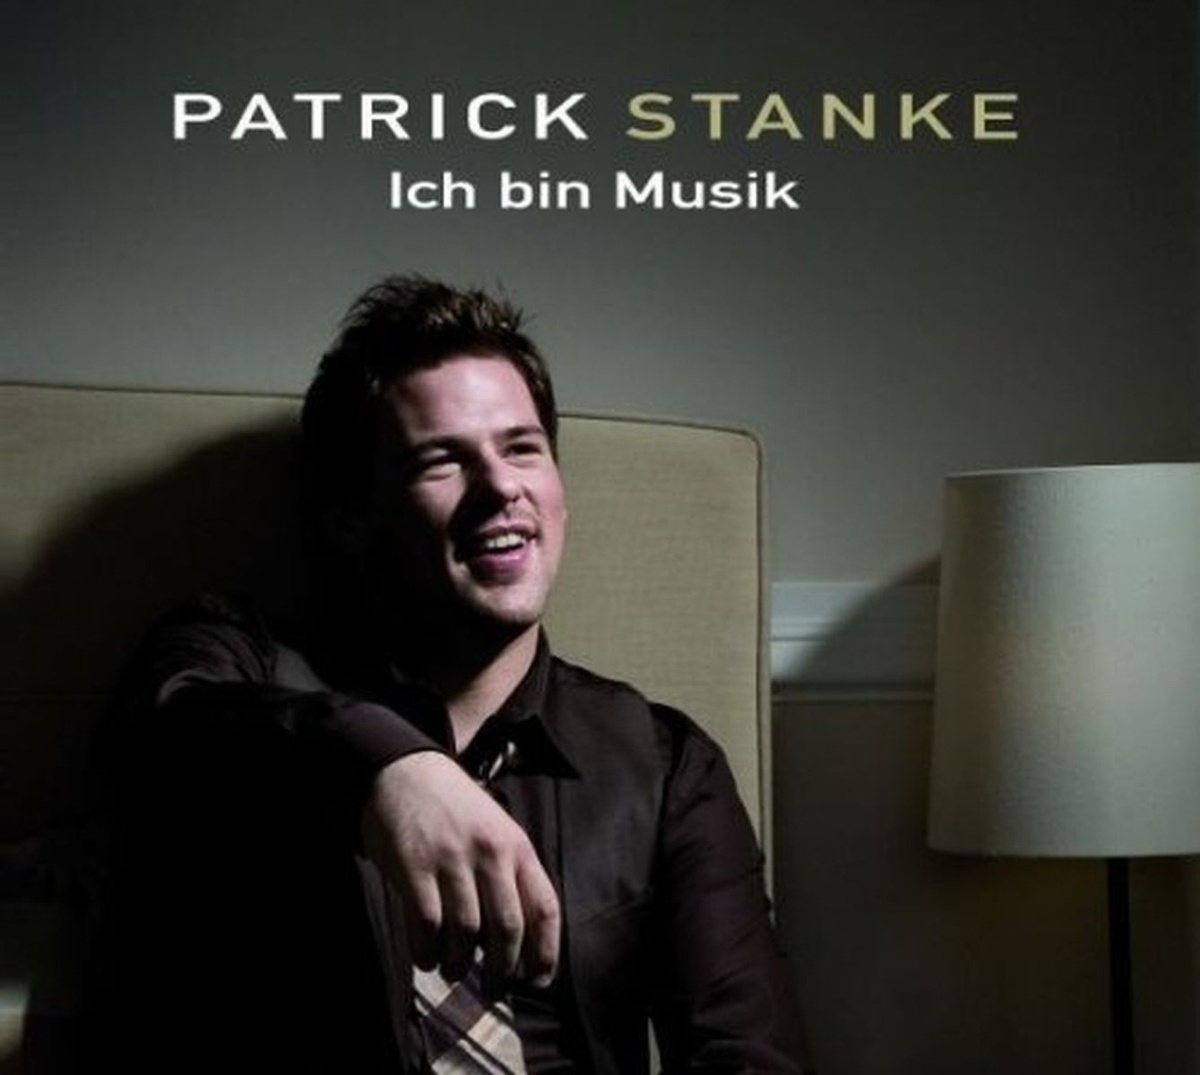 Ich Bin Musik - Patrick Stanke. (CD)